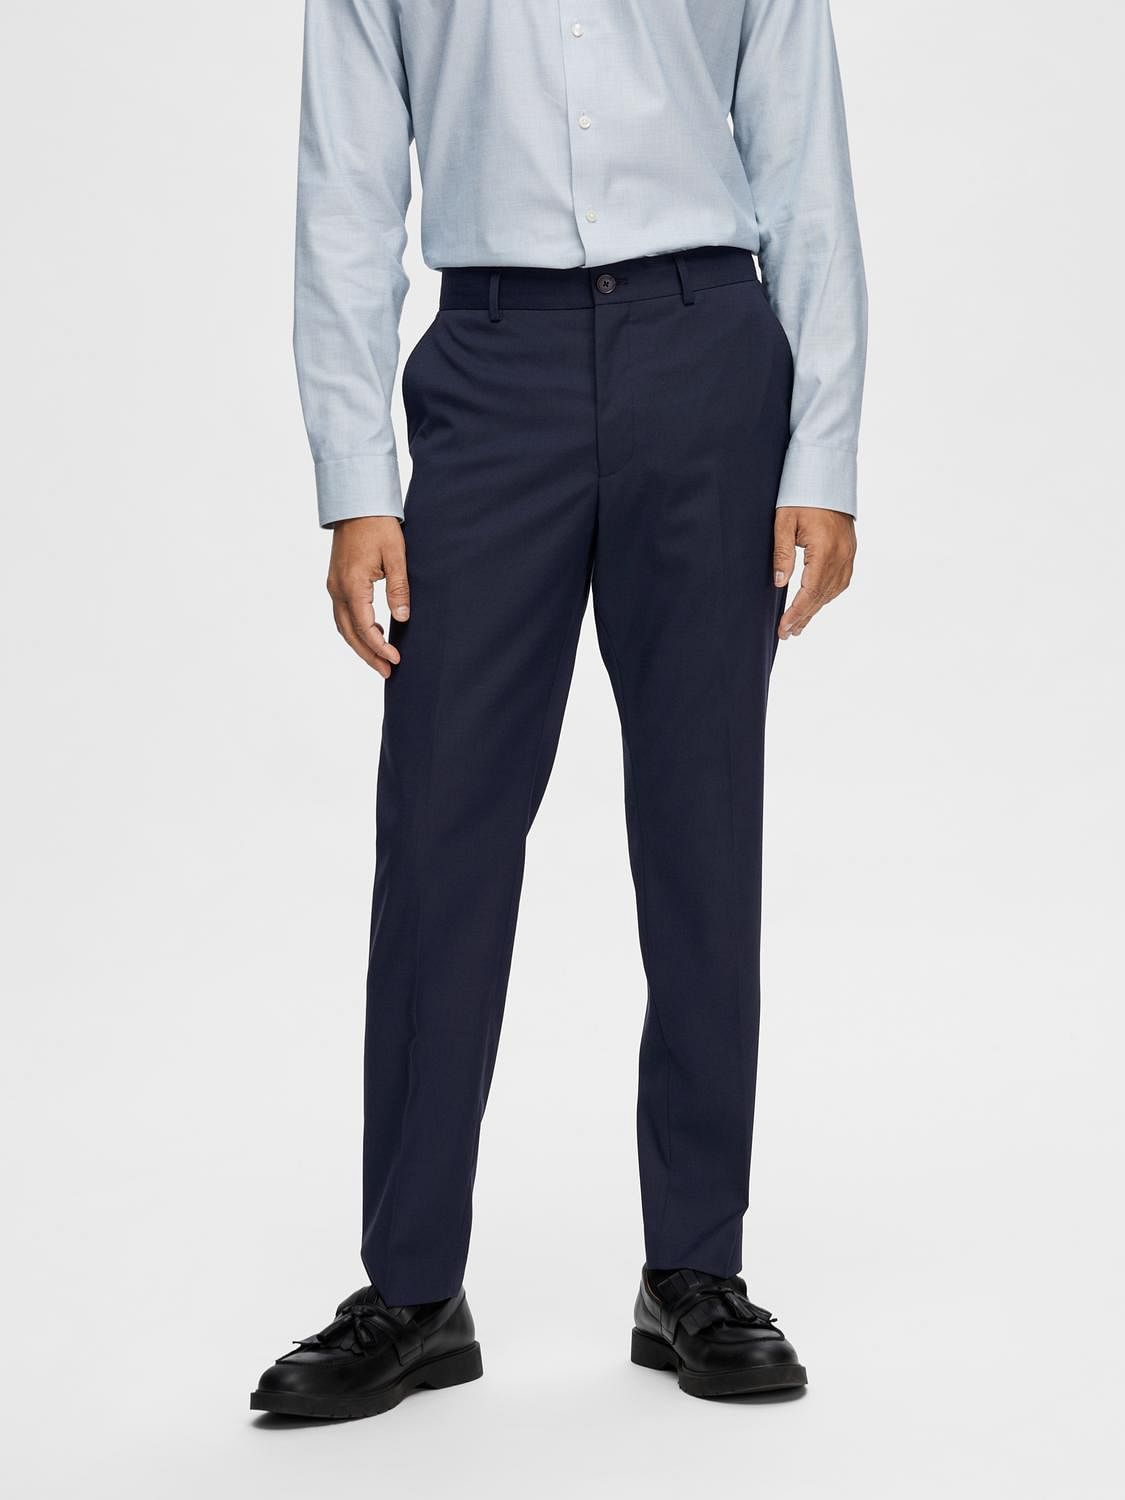 Buy Men Navy Solid Slim Fit Formal Trousers Online - 708335 | Peter England